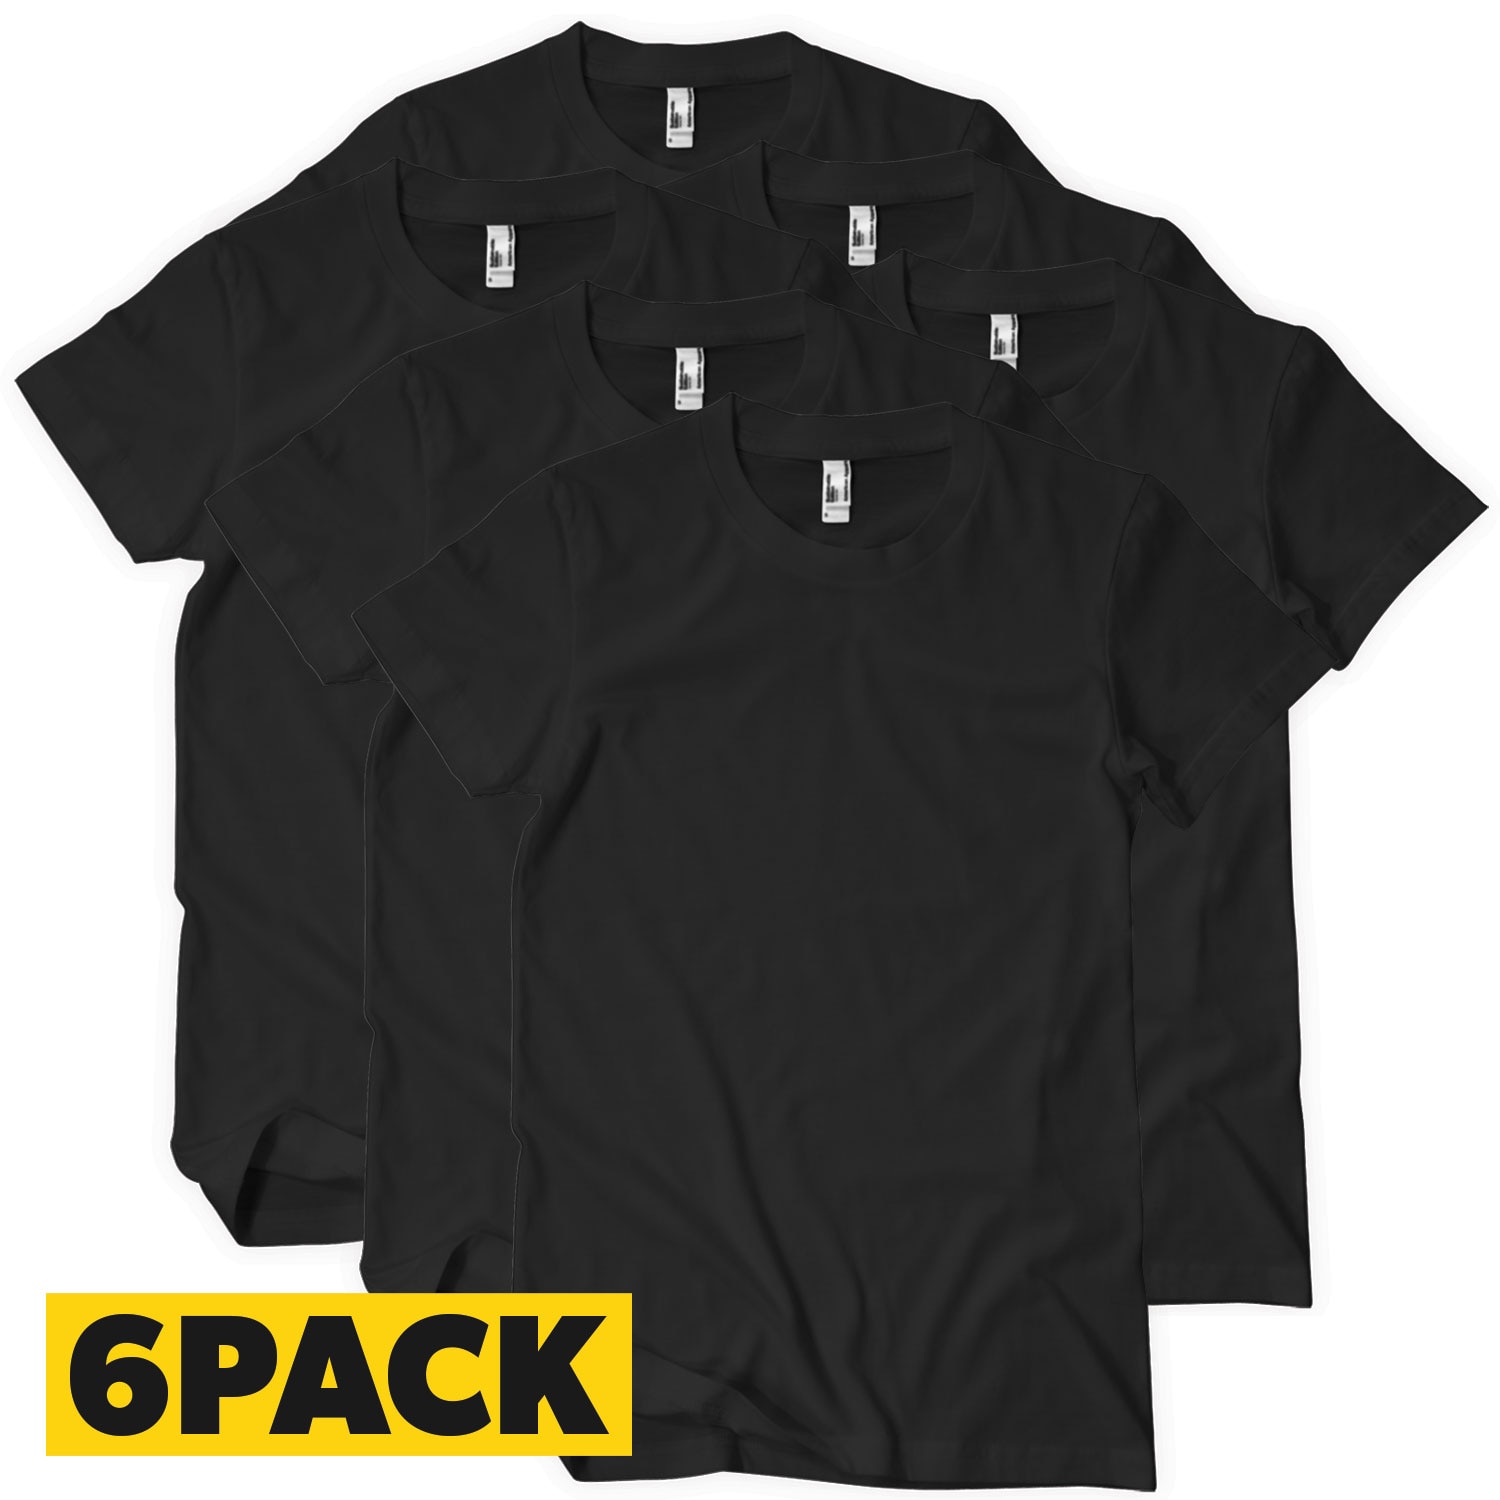 T-Shirts Bigpack Svart - 6 pack